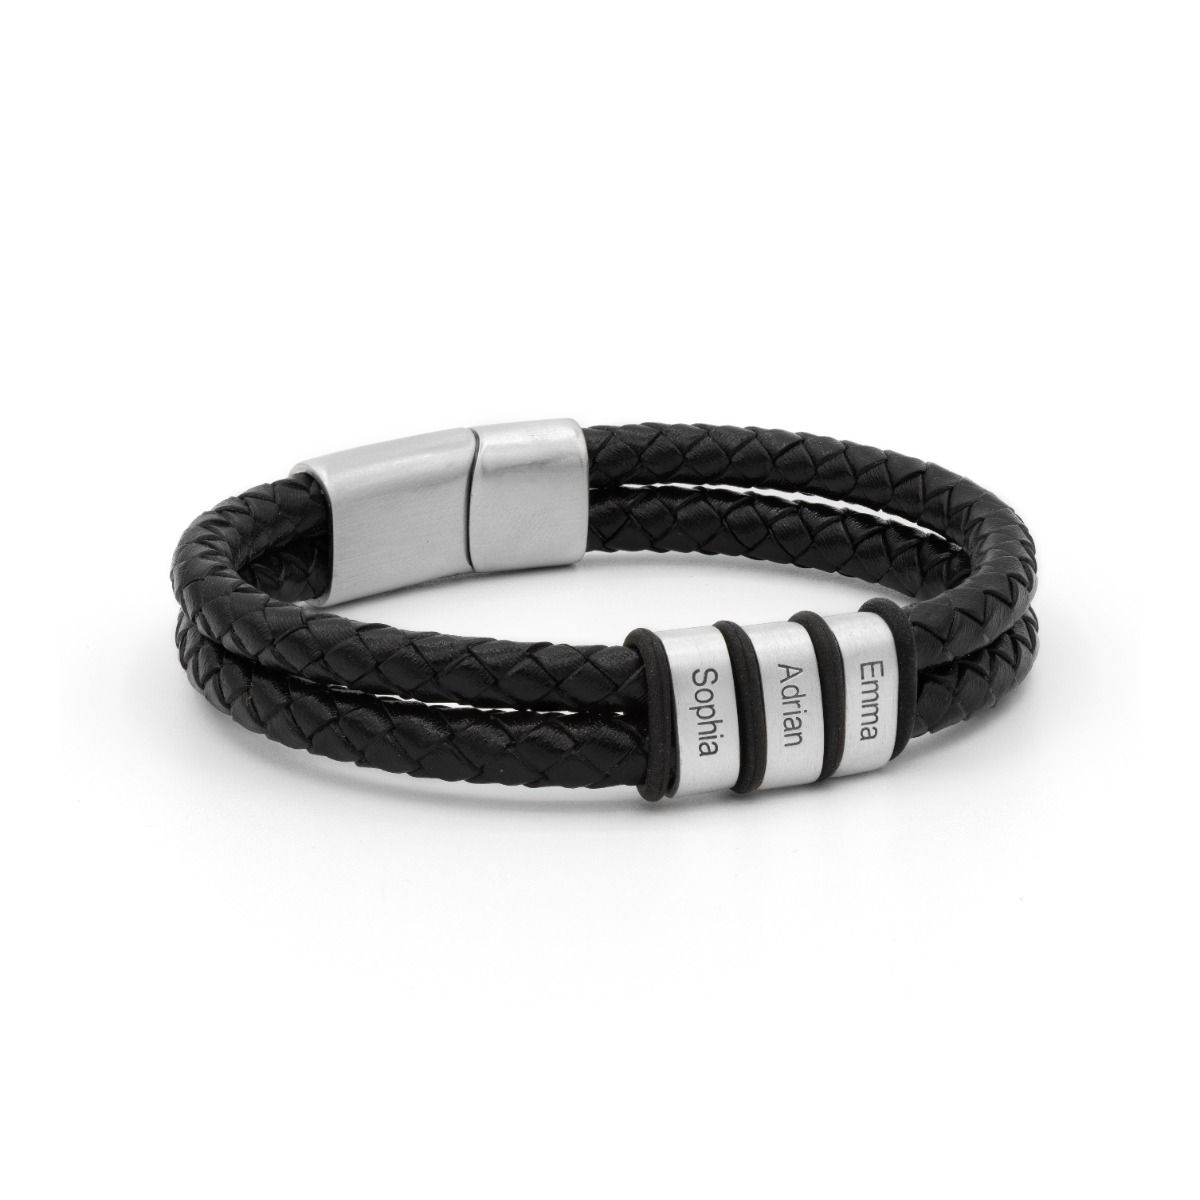 Trafalgar Simple Double Band Braided Secure Clasp Leather Bracelet - Black